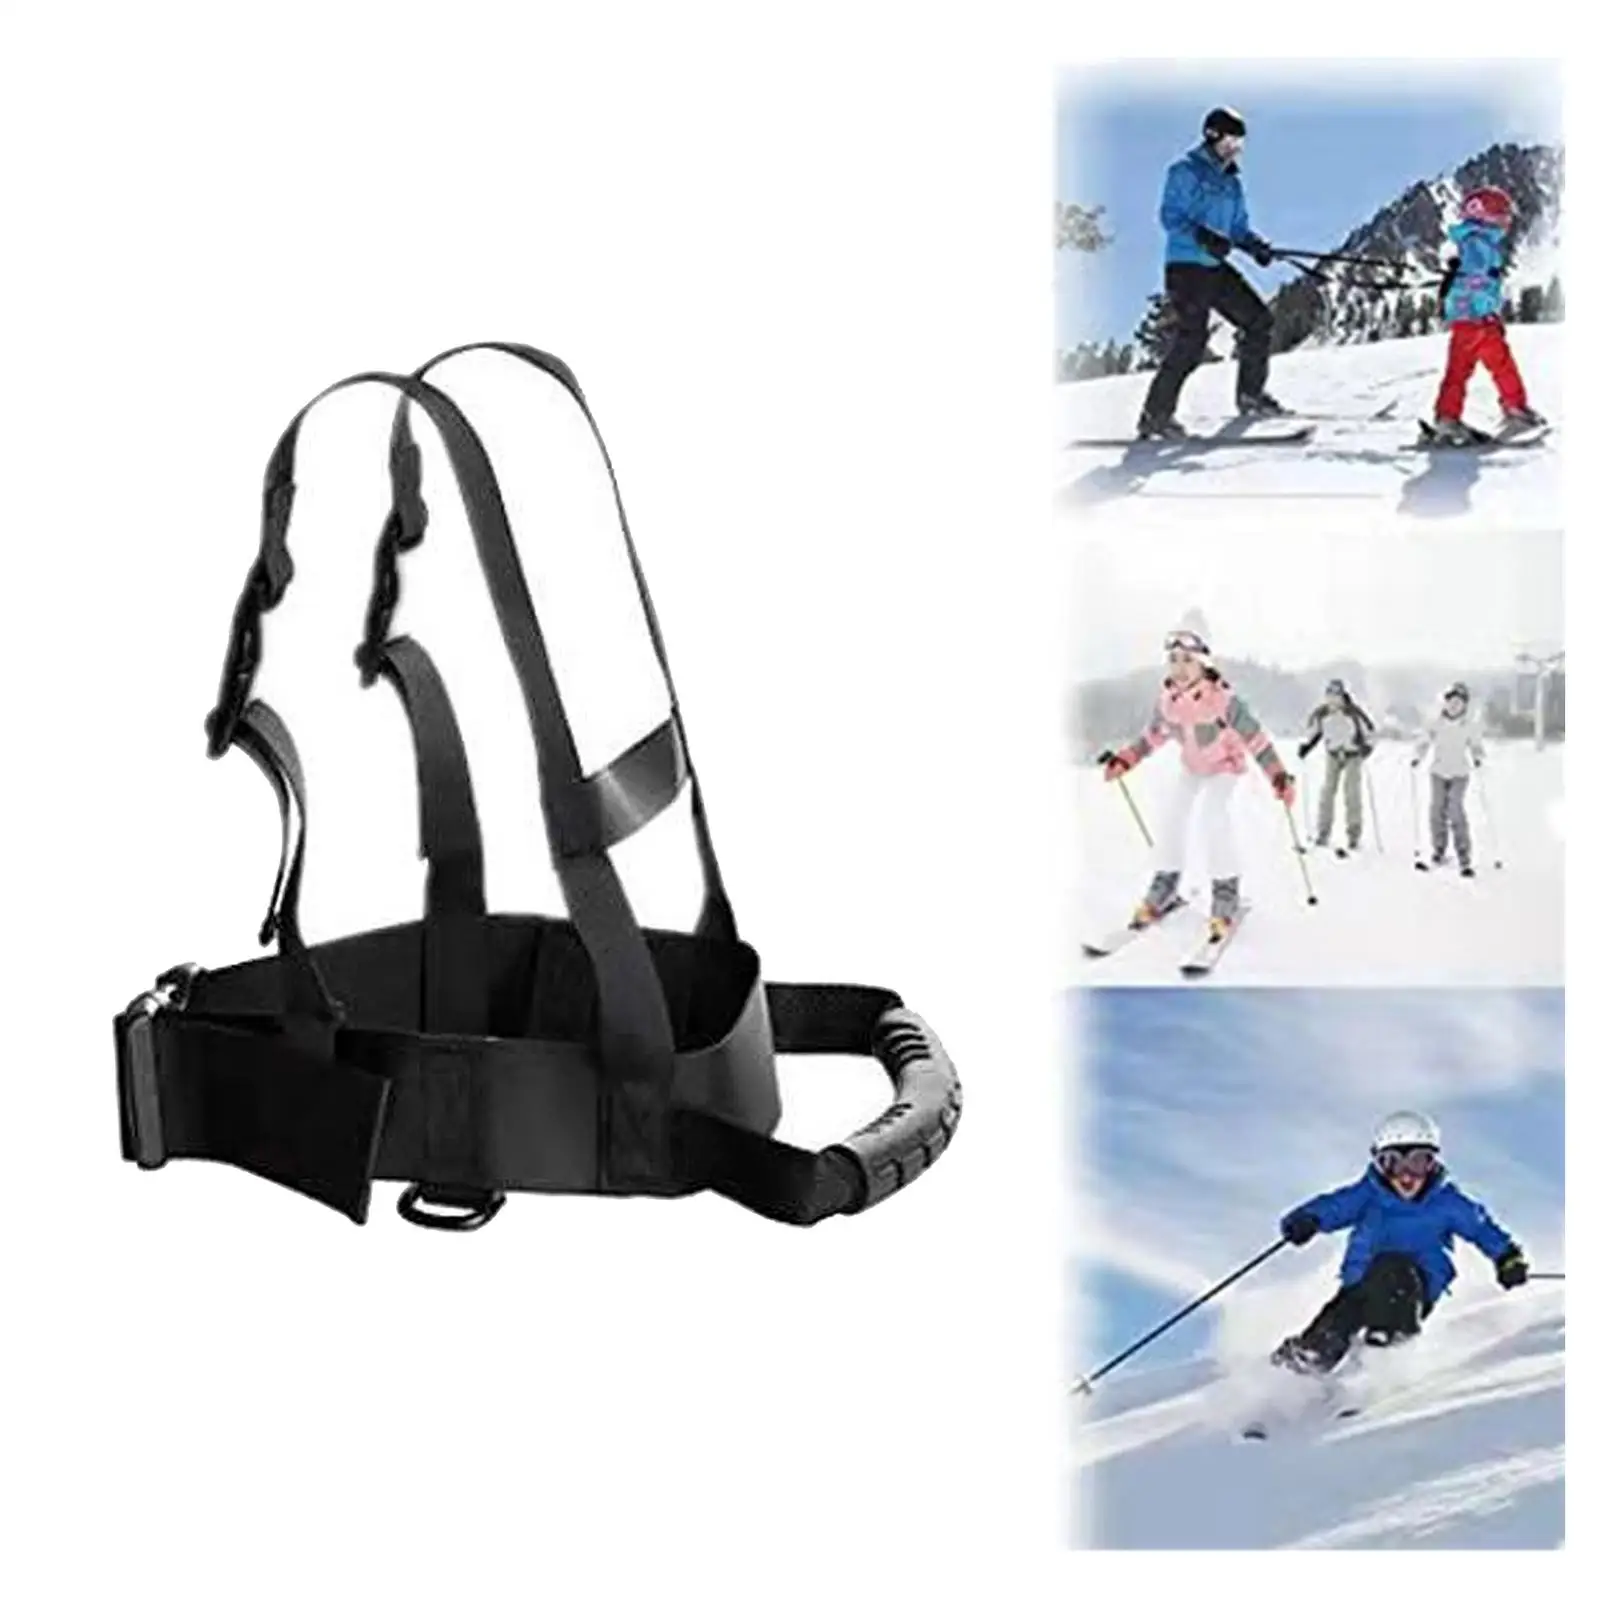 Kids Ski Shoulder Harness Leash Snowboard Harness Trainer with Removable Leash for Children and Beginner Roller Skating Teaching